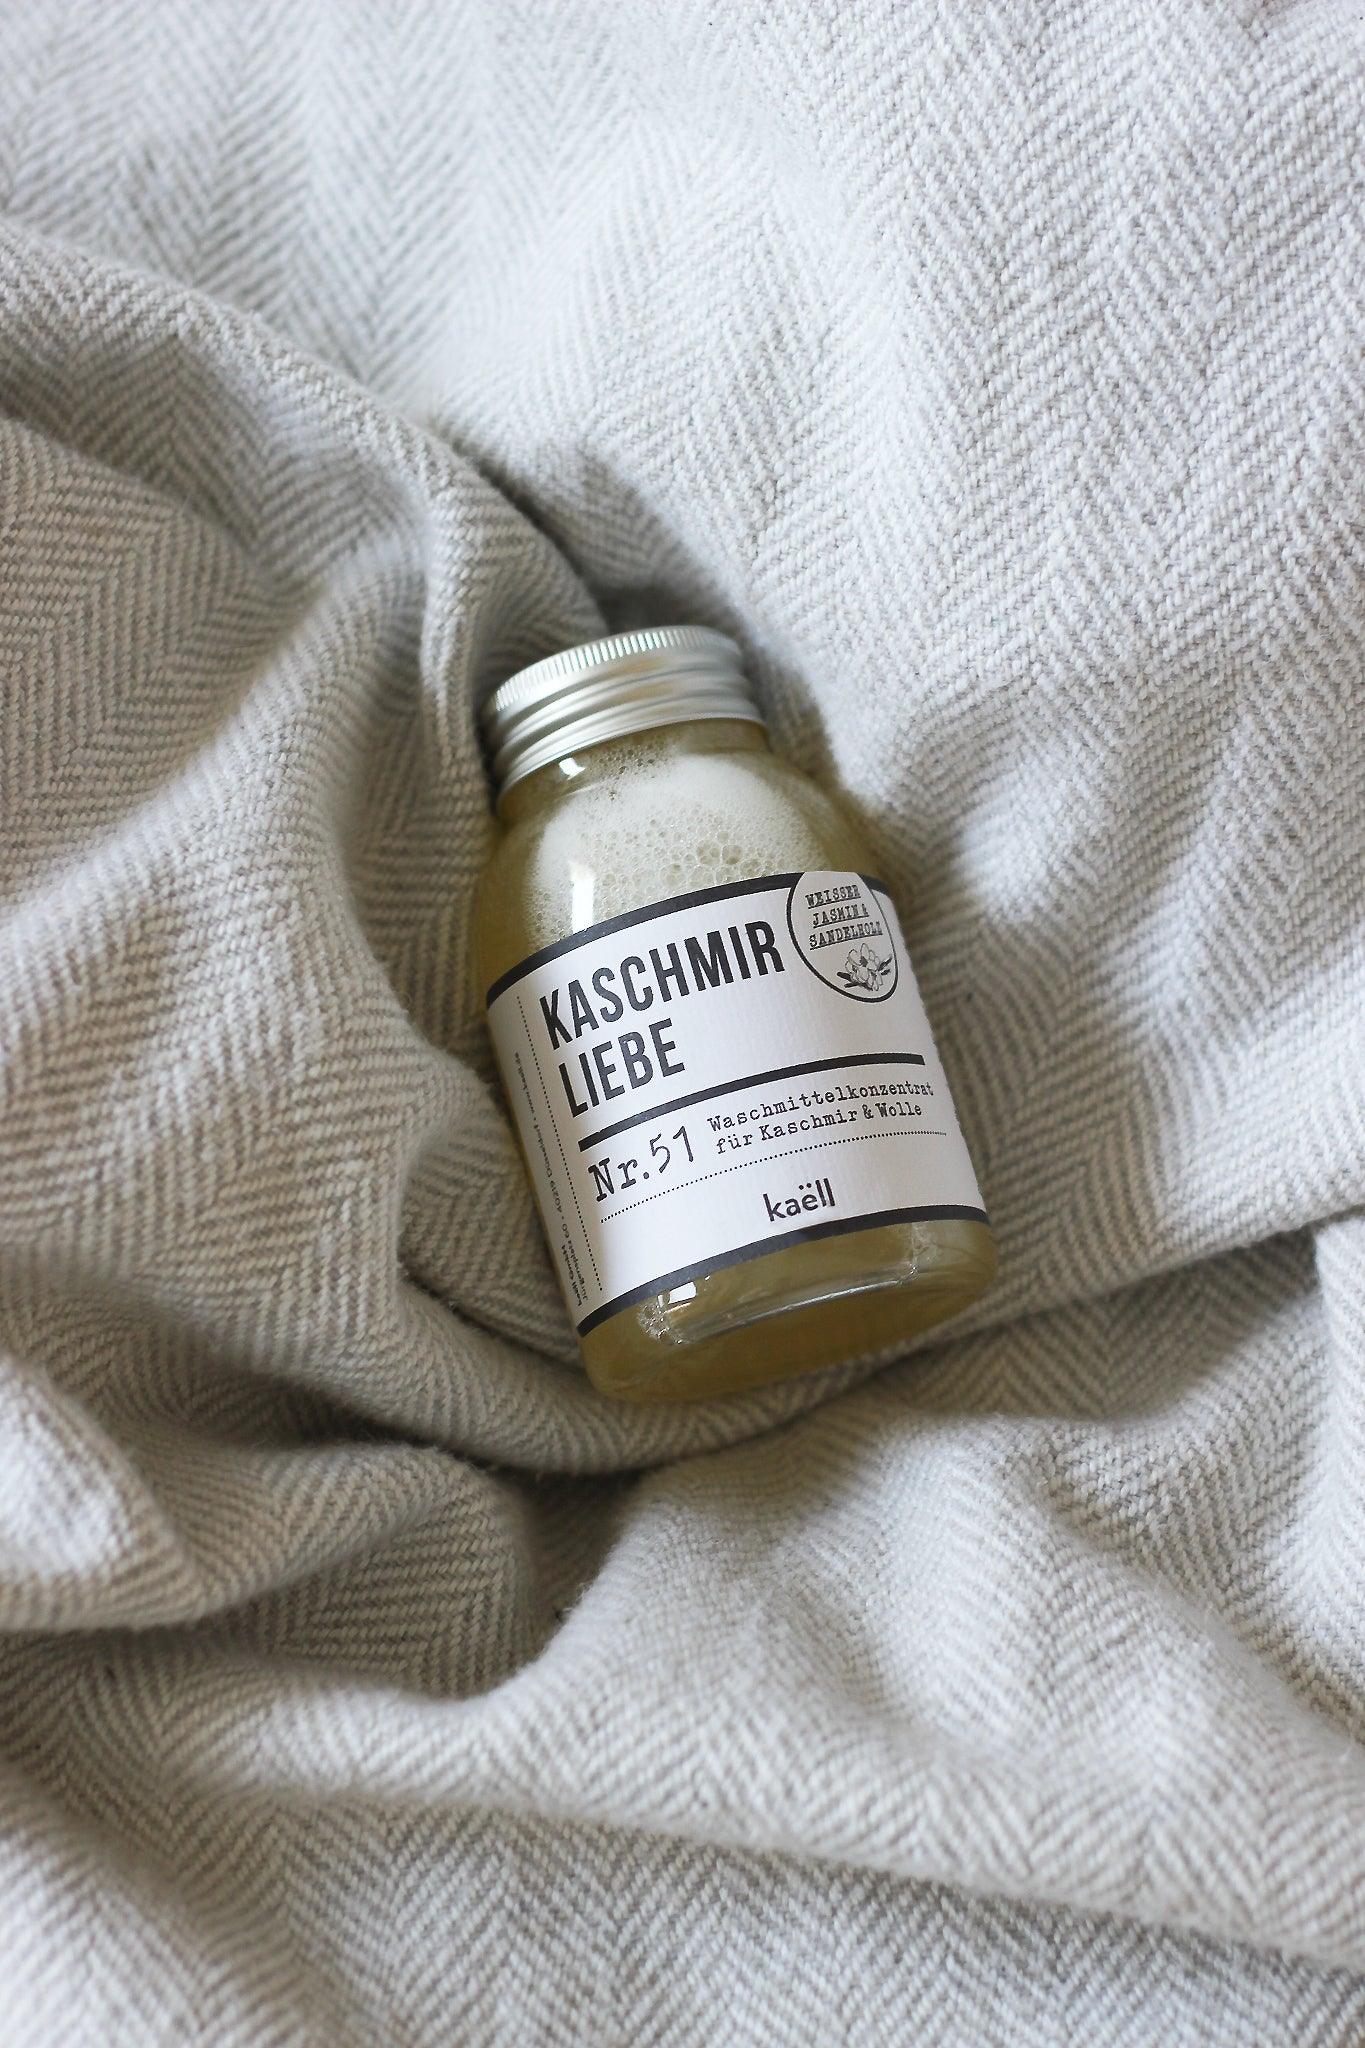 kaëll - Waschmittel "Kaschmirliebe" für Kaschmir und Wolle | 500 ml - Leja Concept Store kaëll